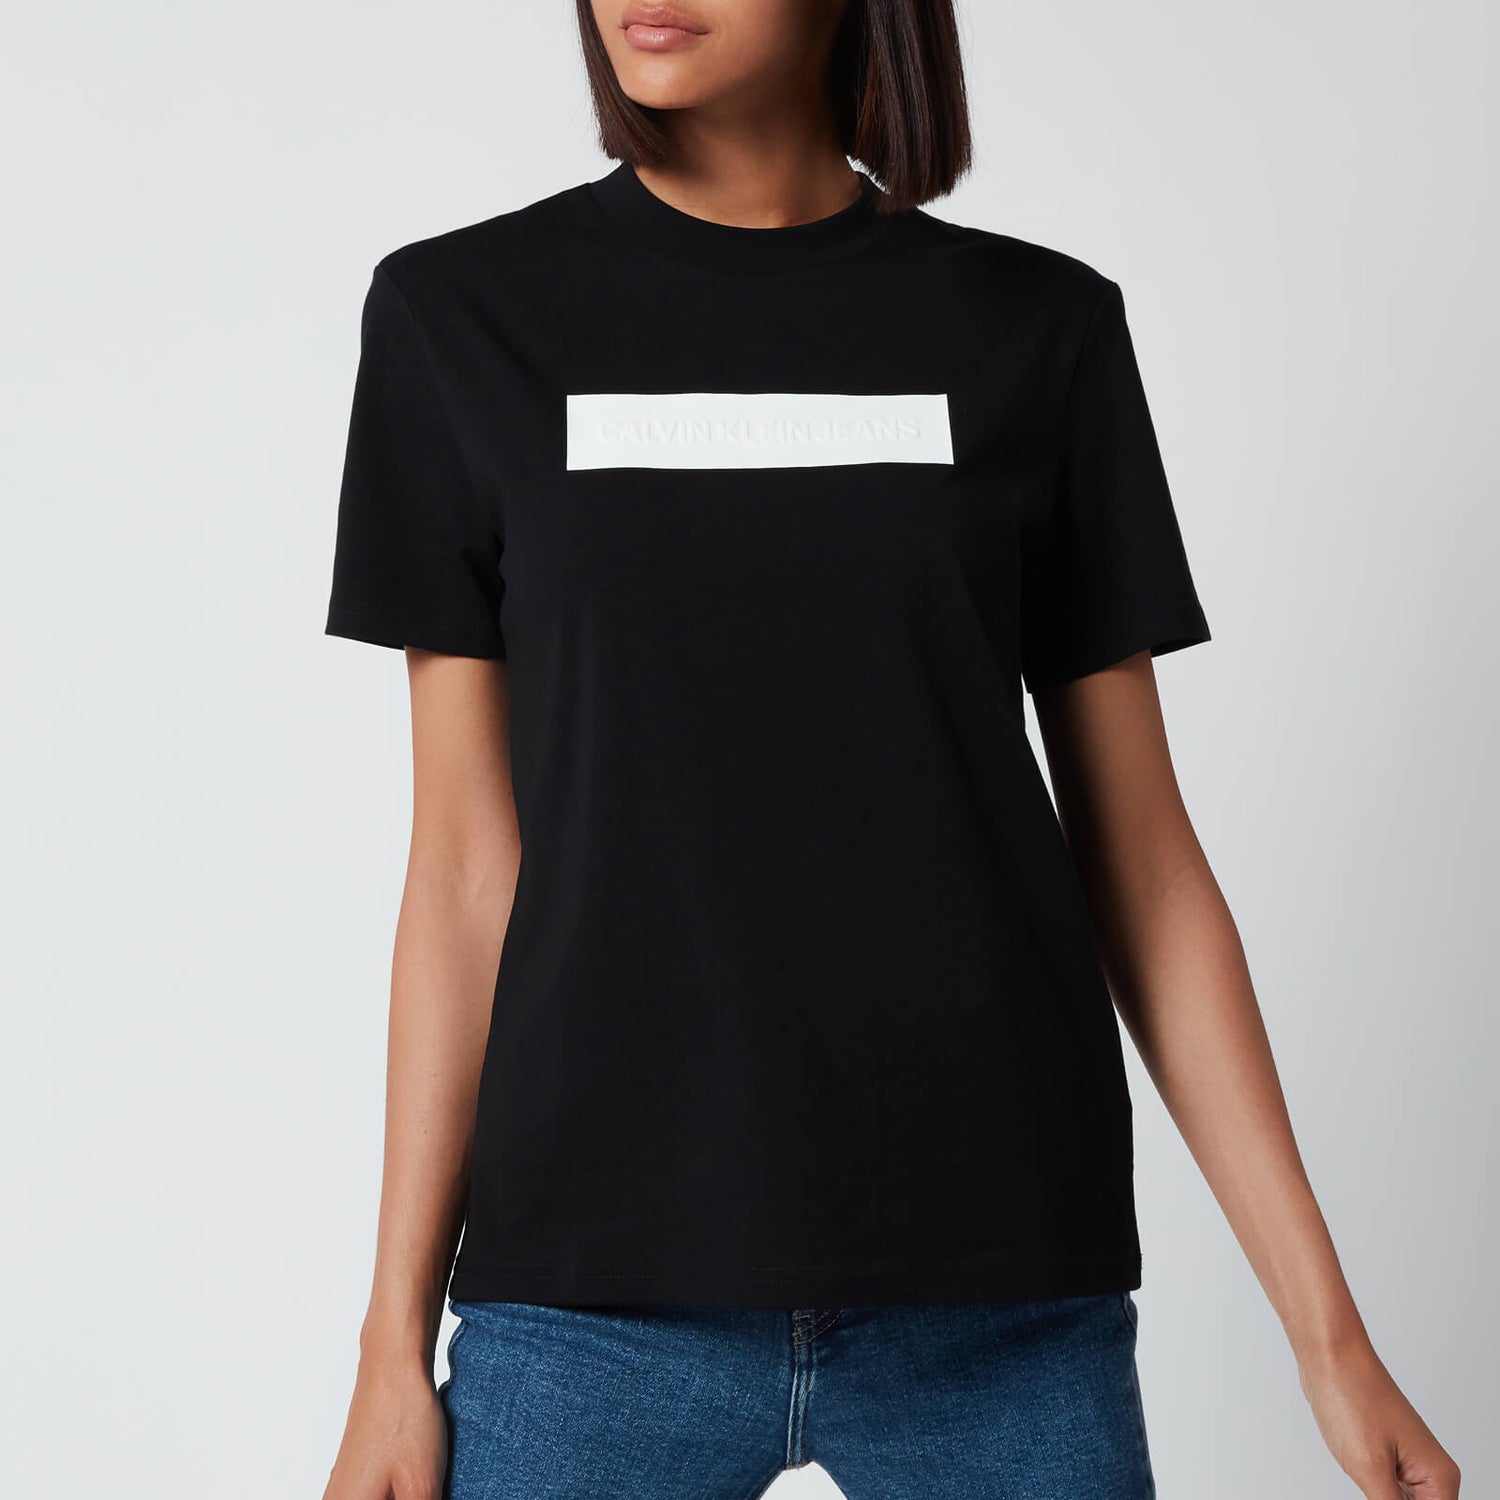 Calvin Klein Jeans Women's Hero Logo T-Shirt - CK Black/Bright White